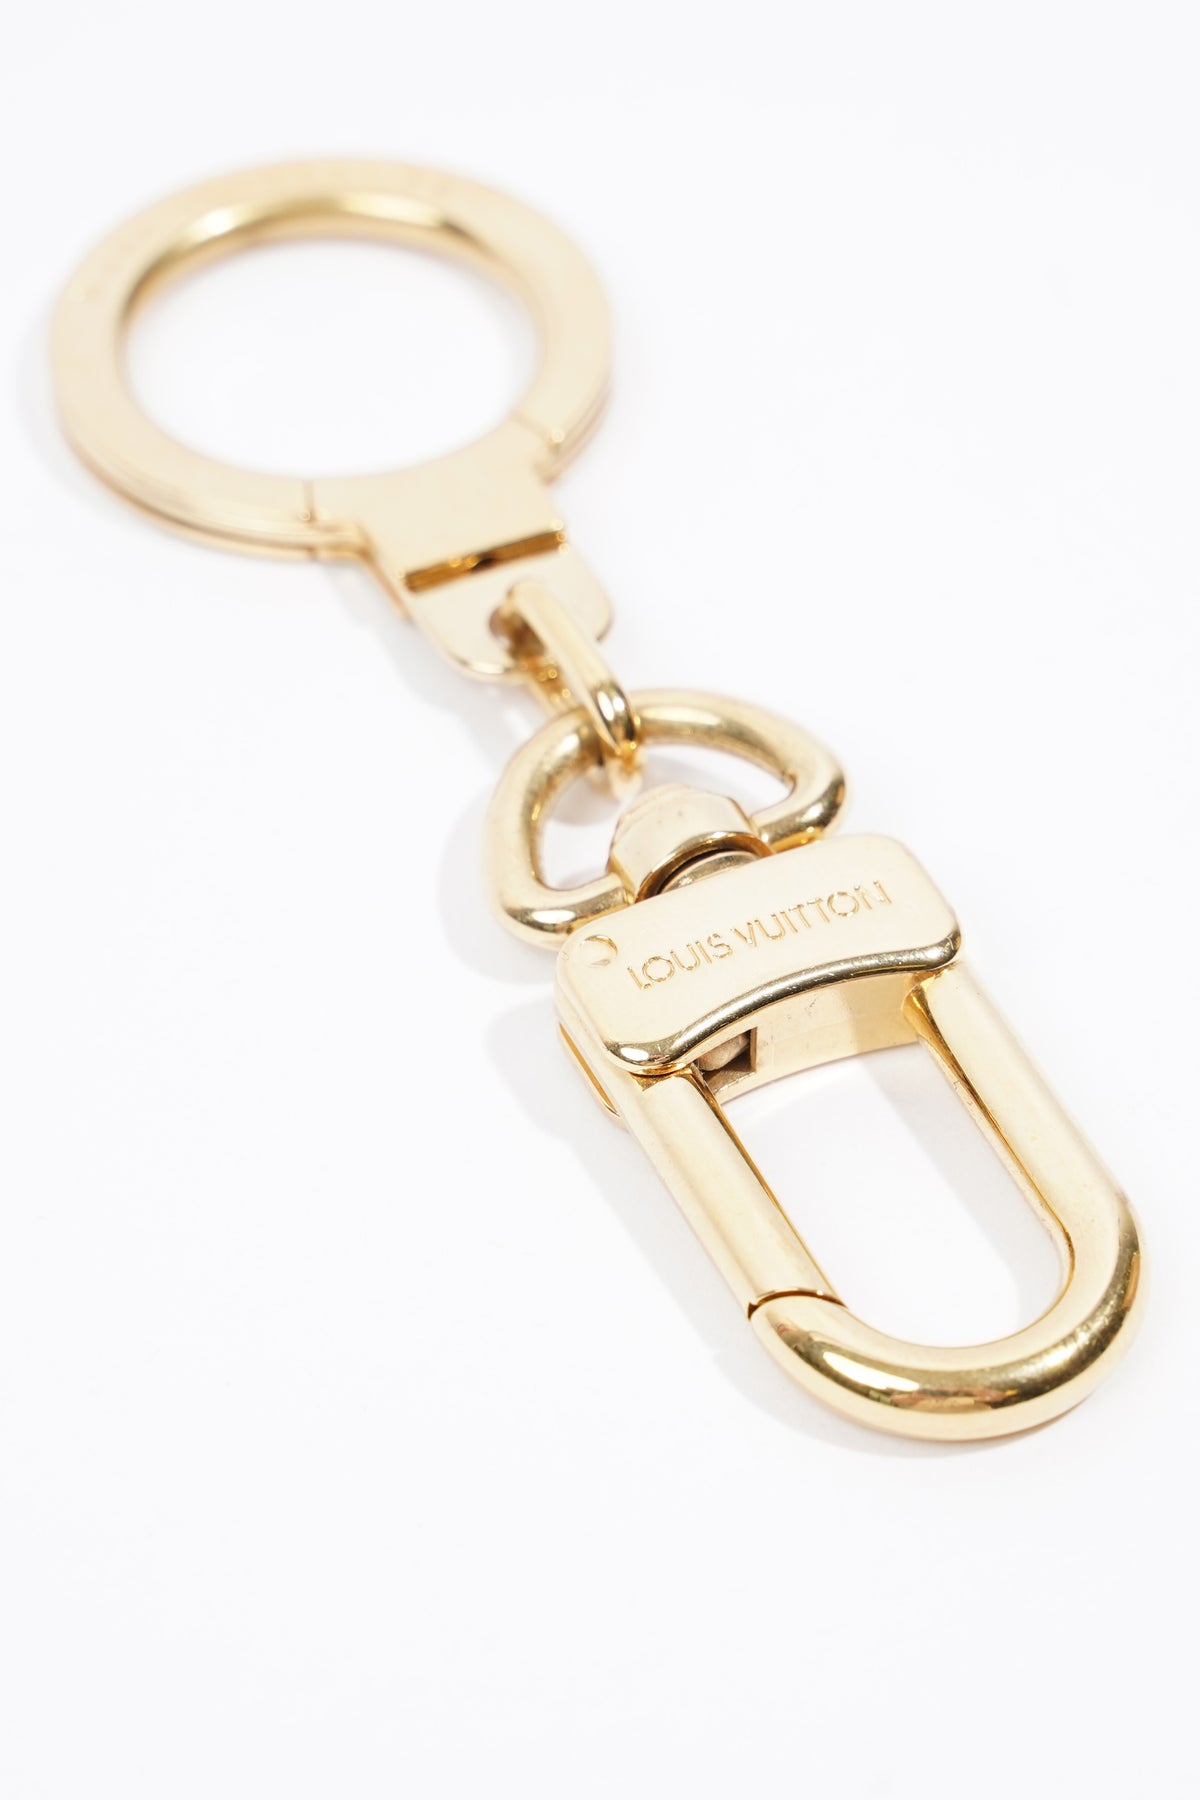 Louis Vuitton Womens Key Ring Extender Golden Finish Base Metal